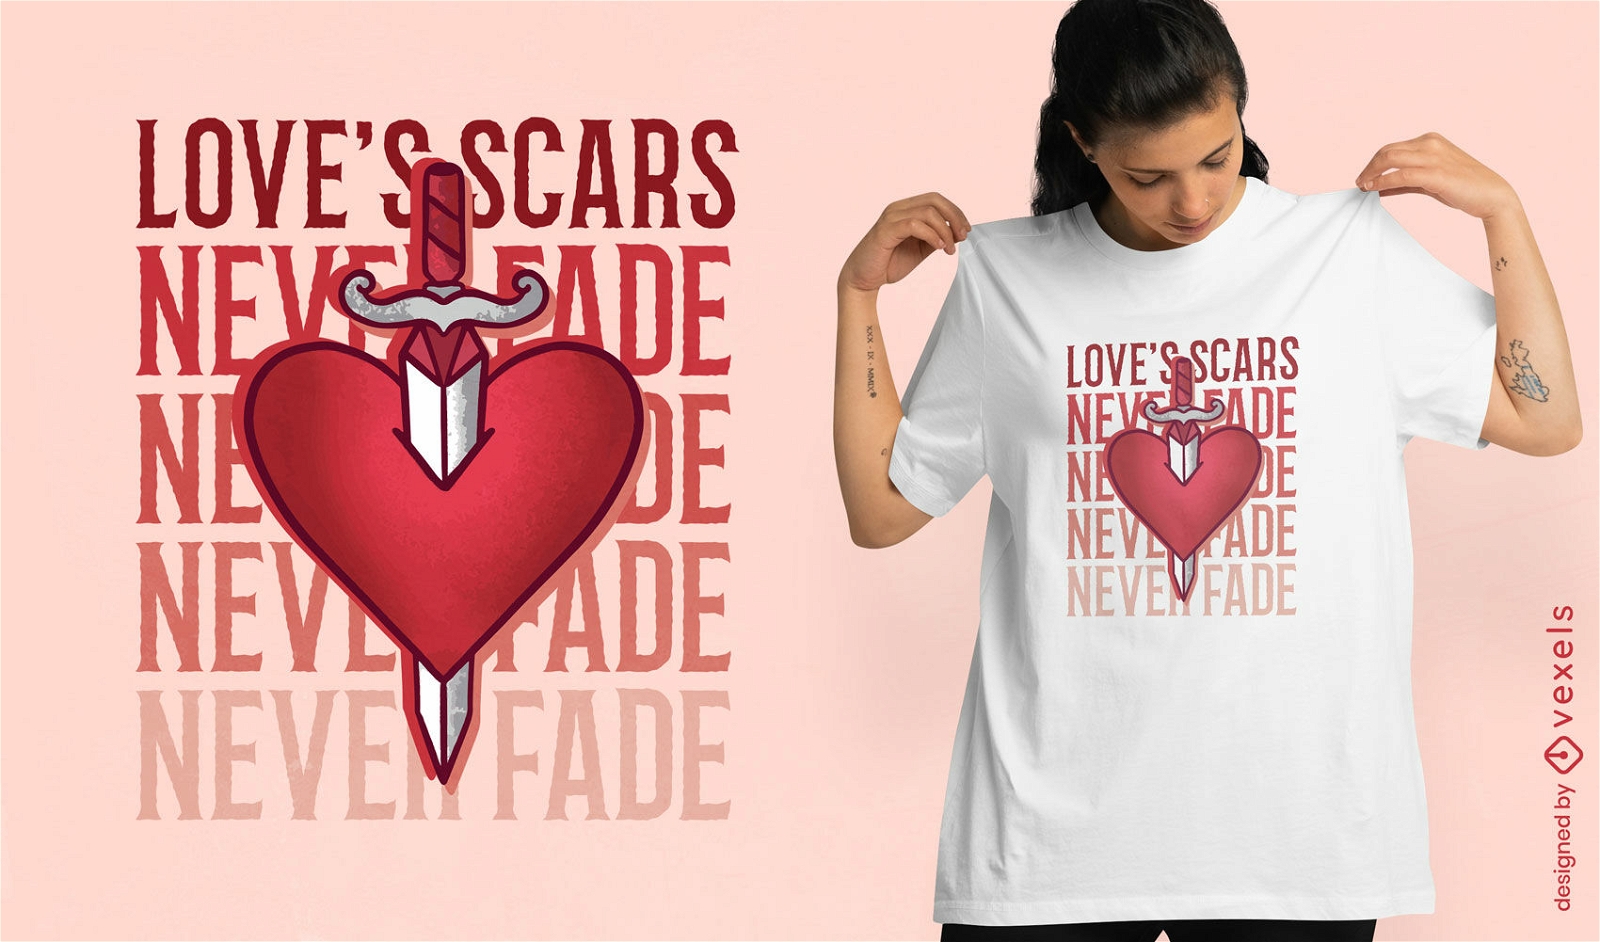 Dise?o de camiseta de cicatrices de amor.